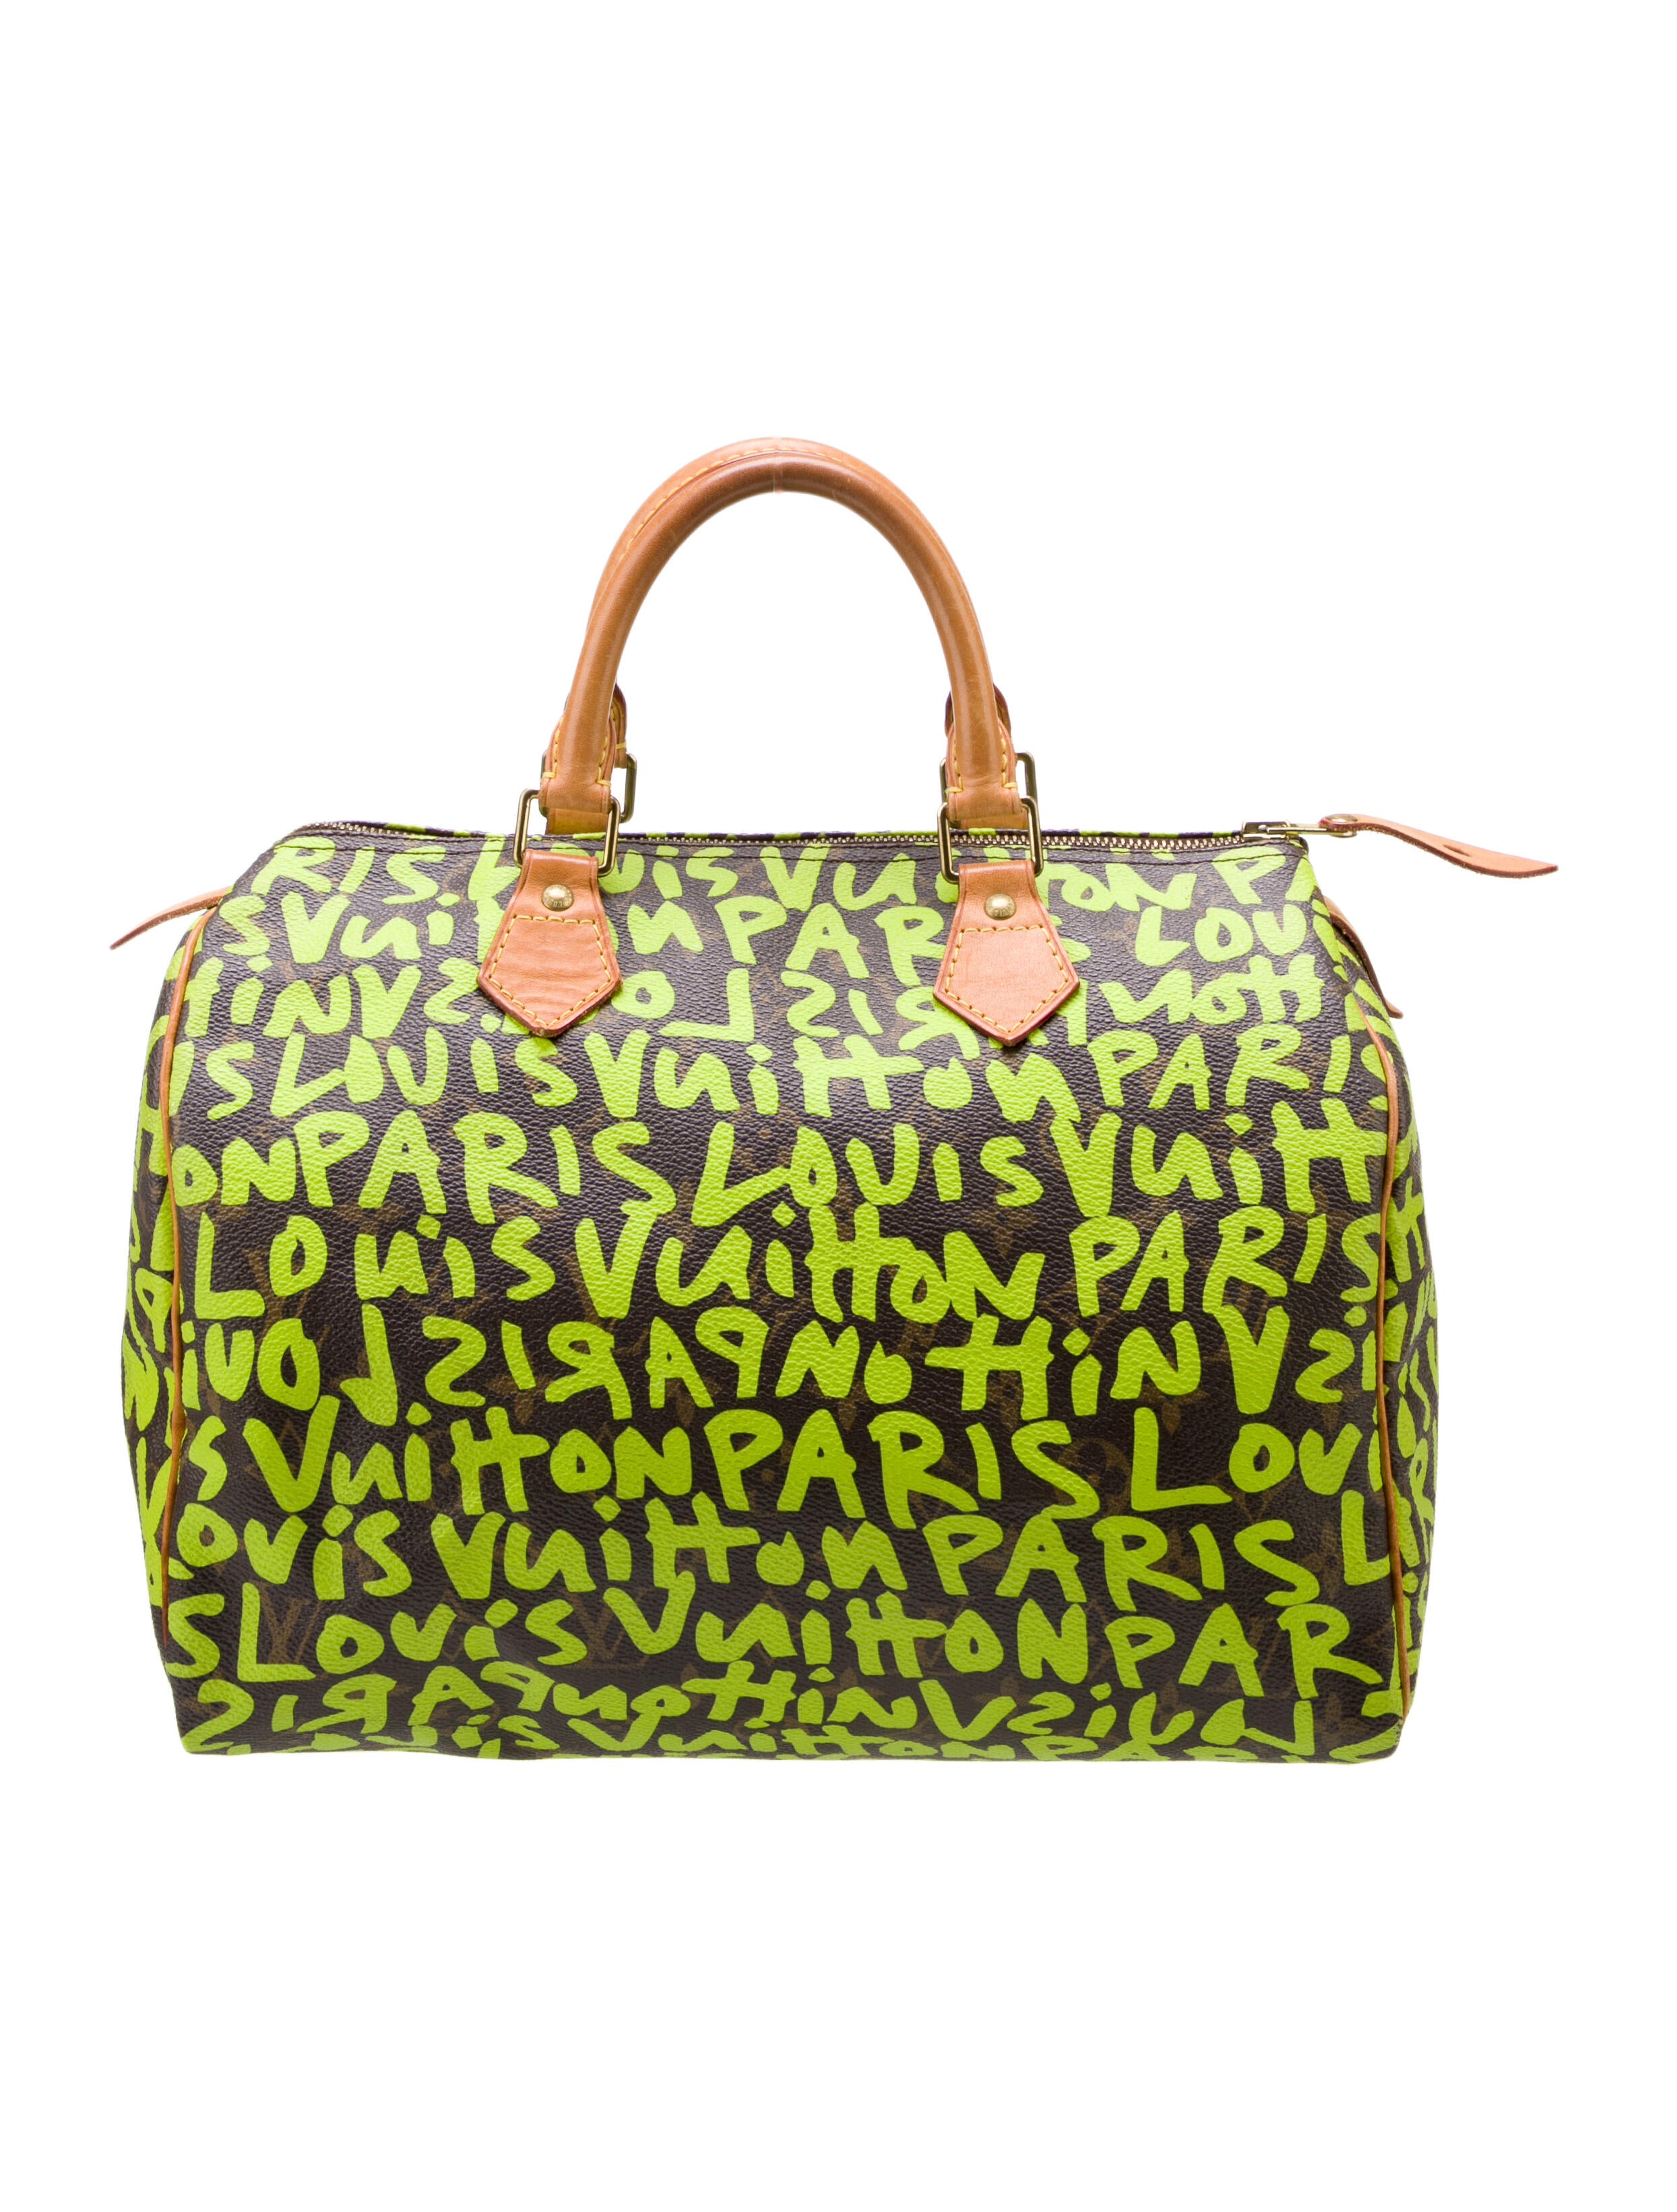 LOUIS VUITTON, bag, 'Speedy Multicolor', 21st century. - Bukowskis